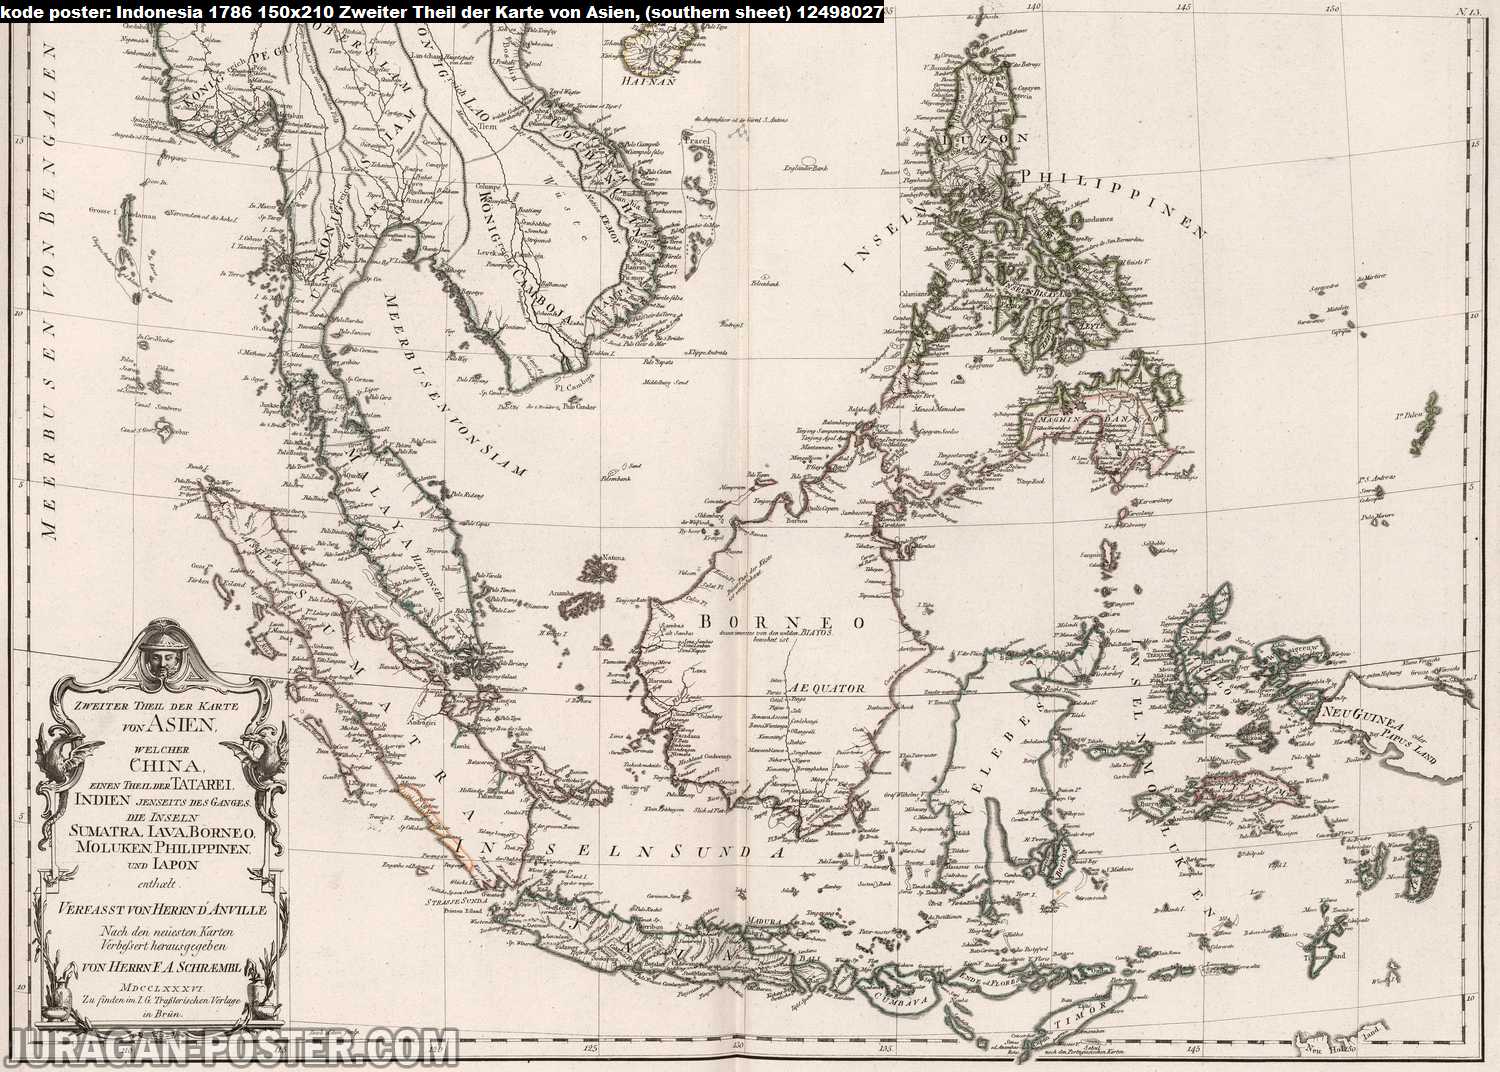 peta indonesia kuno tahun 1786